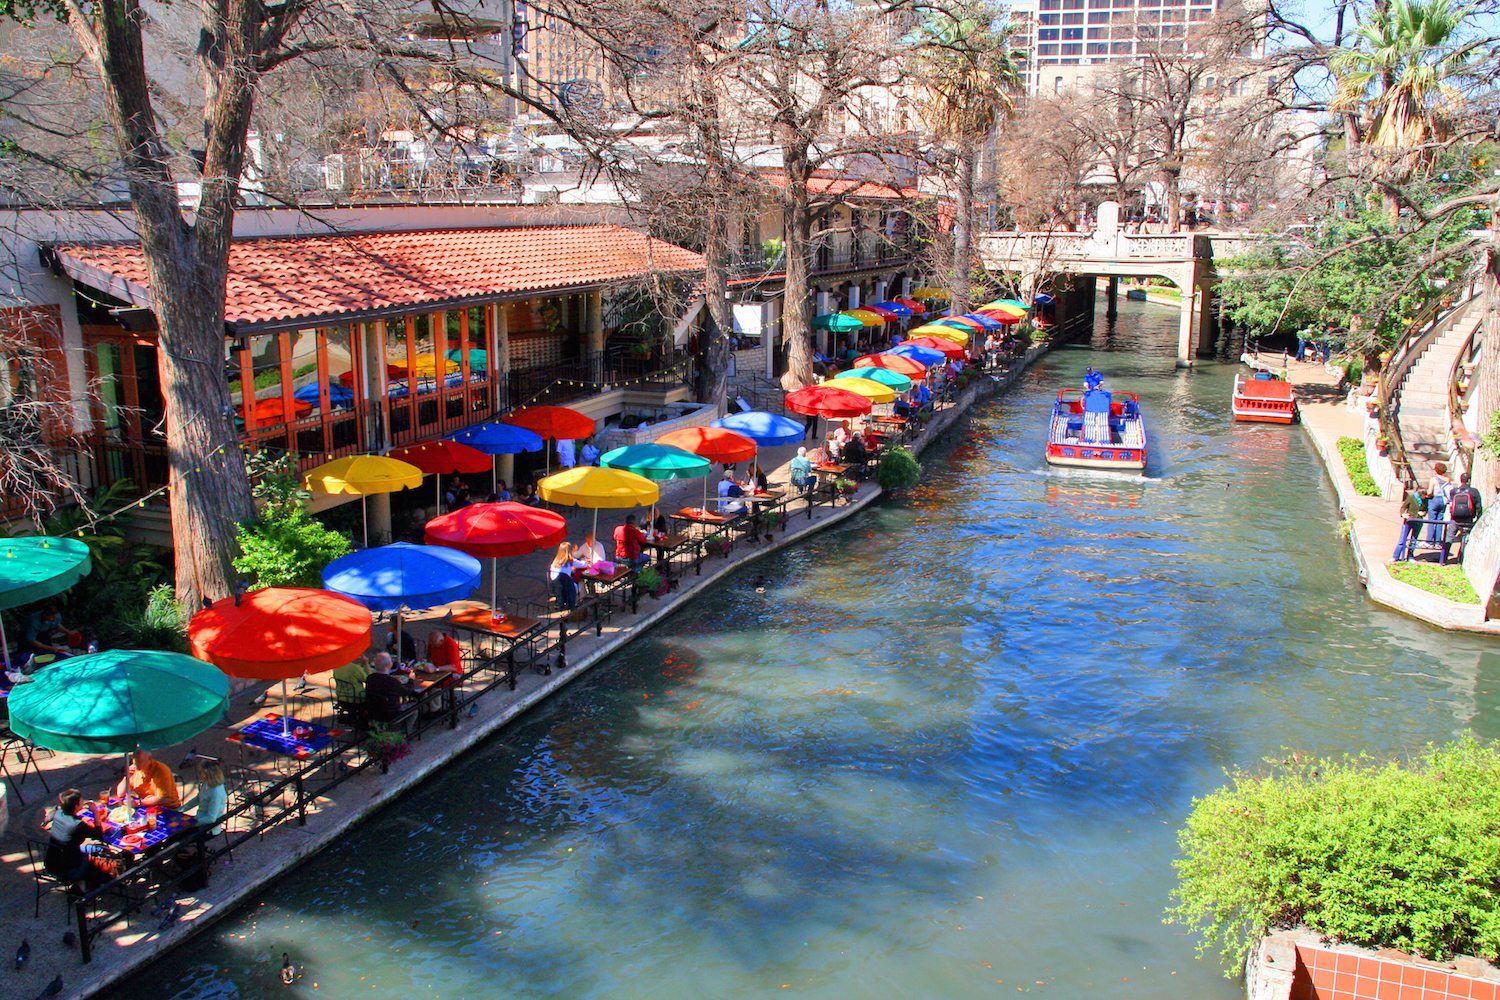 the San Antonio riverwalk.